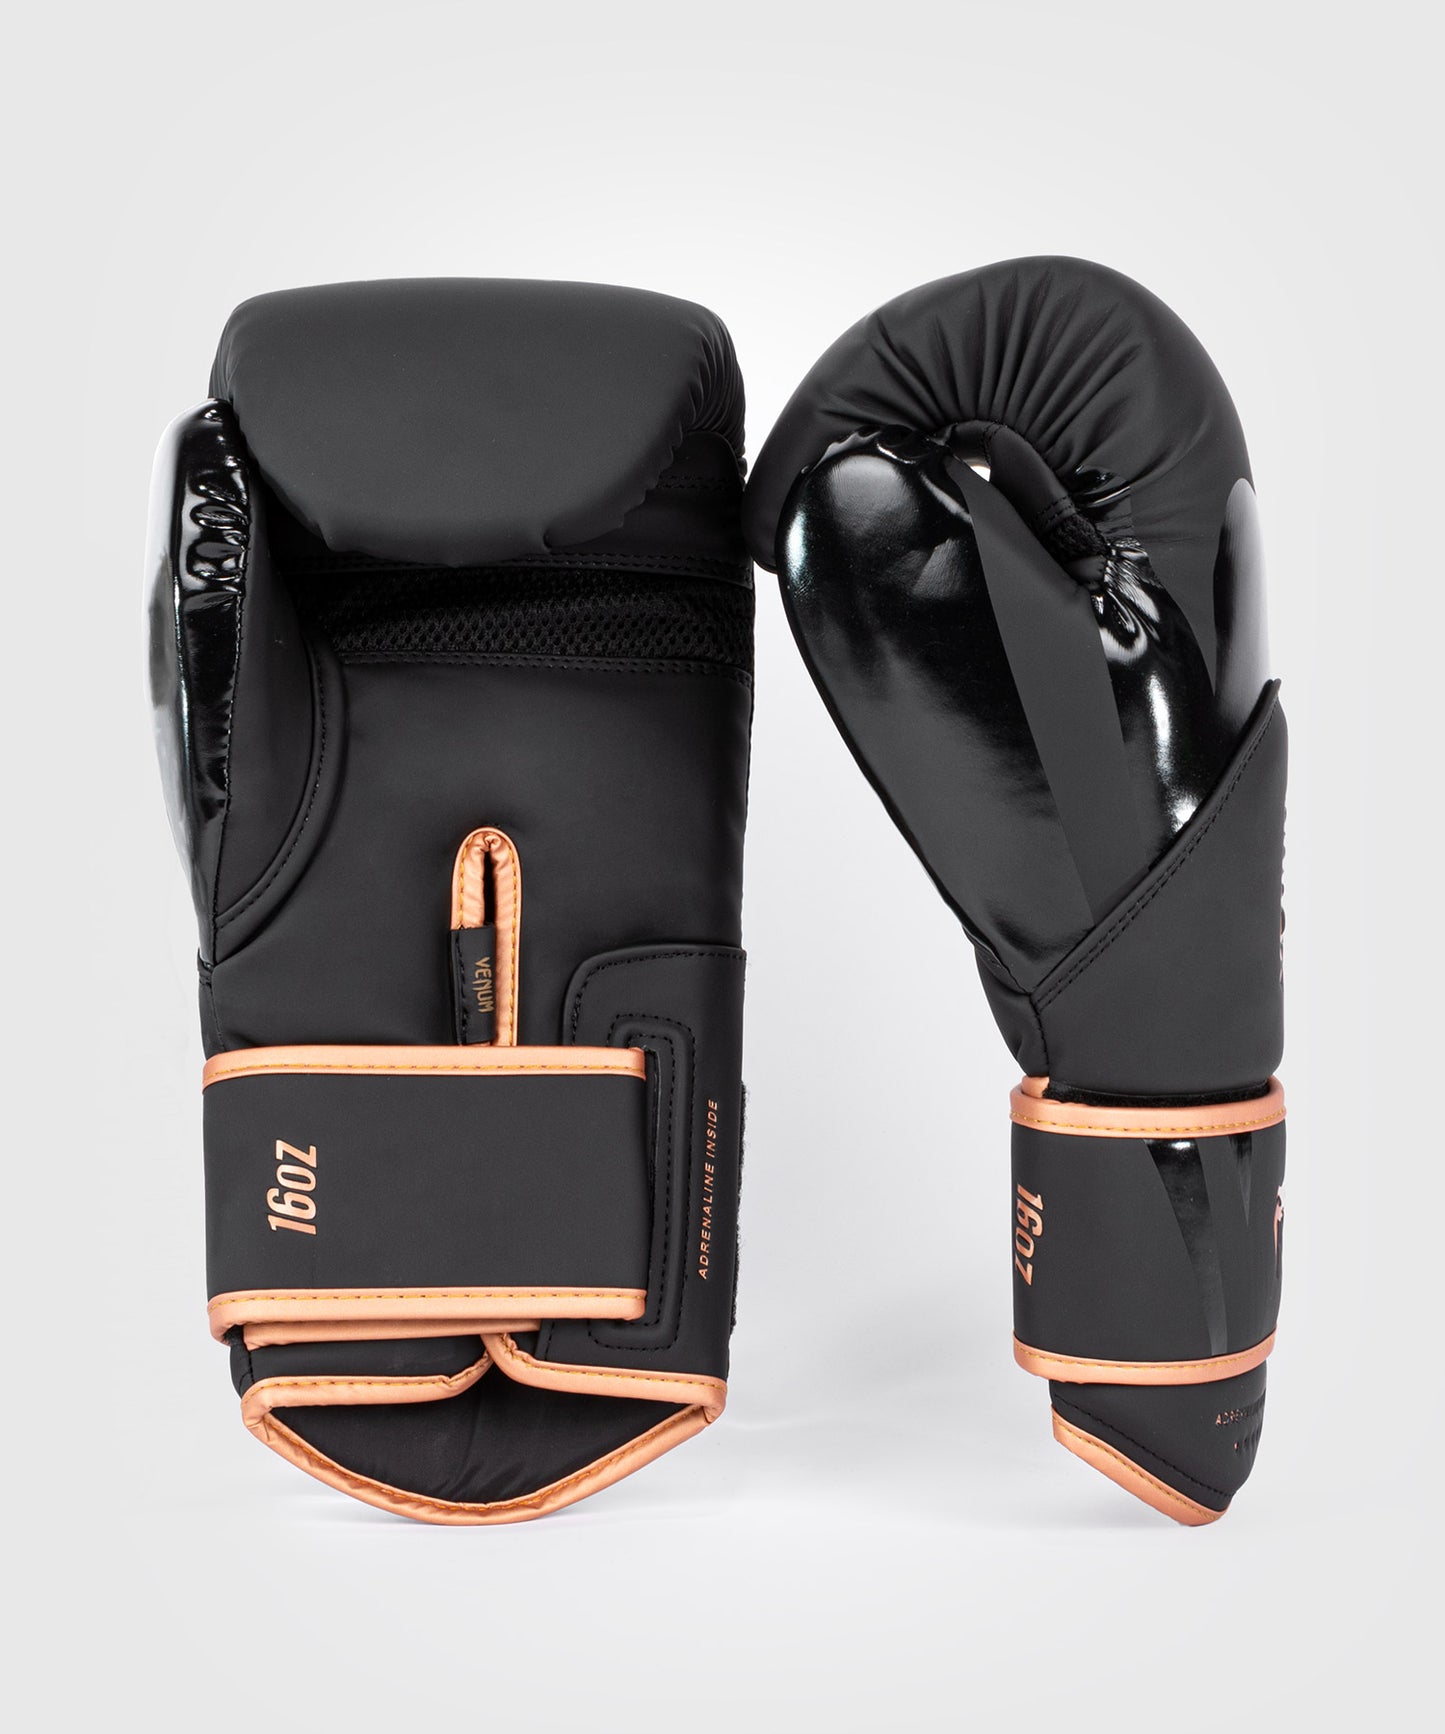 Venum Challenger 4.0 Boxing Gloves - Black/Bronze